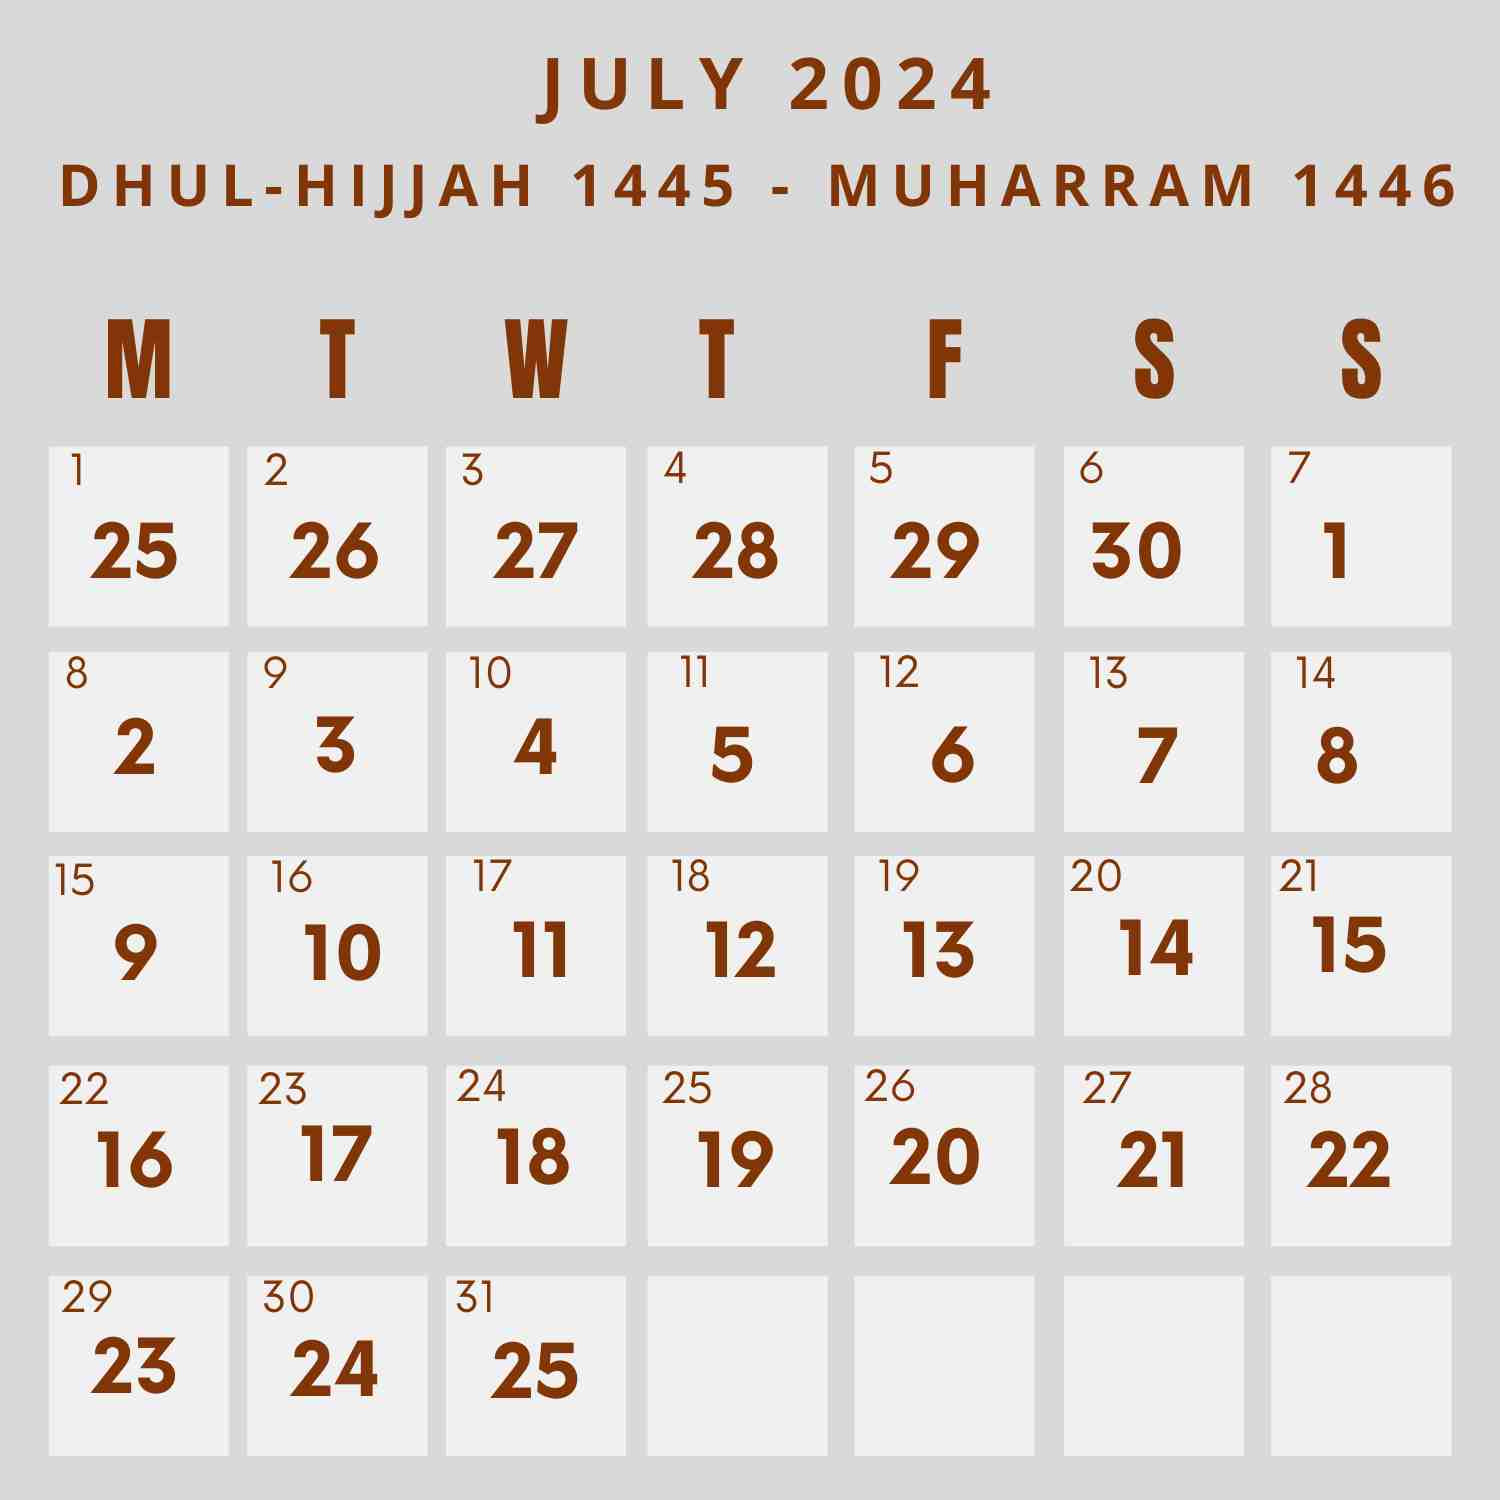 Islamic Calendar 2024 - Khwajadarbar in 17 July 2024 in Islamic Calendar